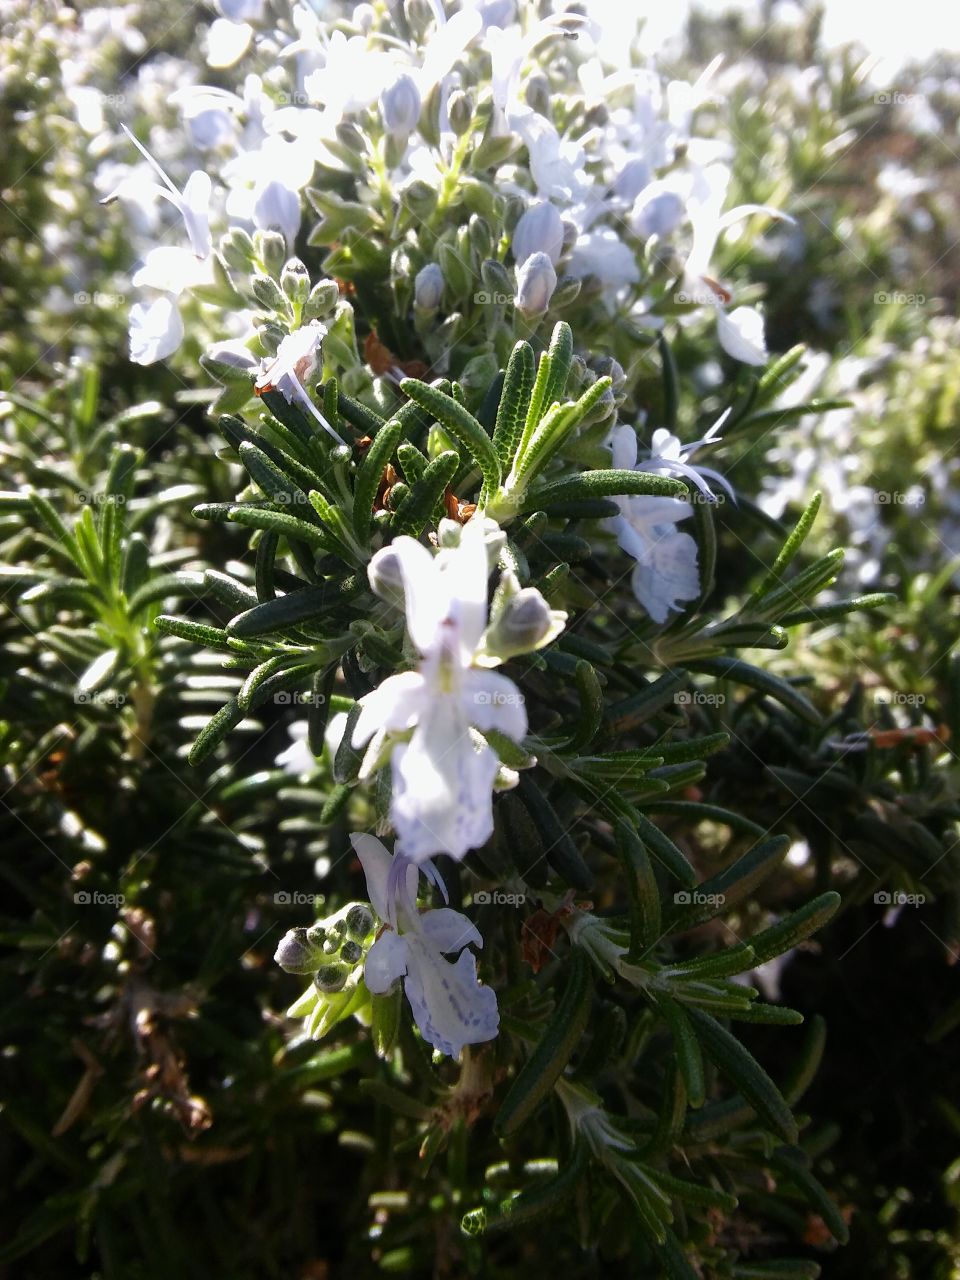 A beautiful close-up of wild Rosemary.
#FoapJune18